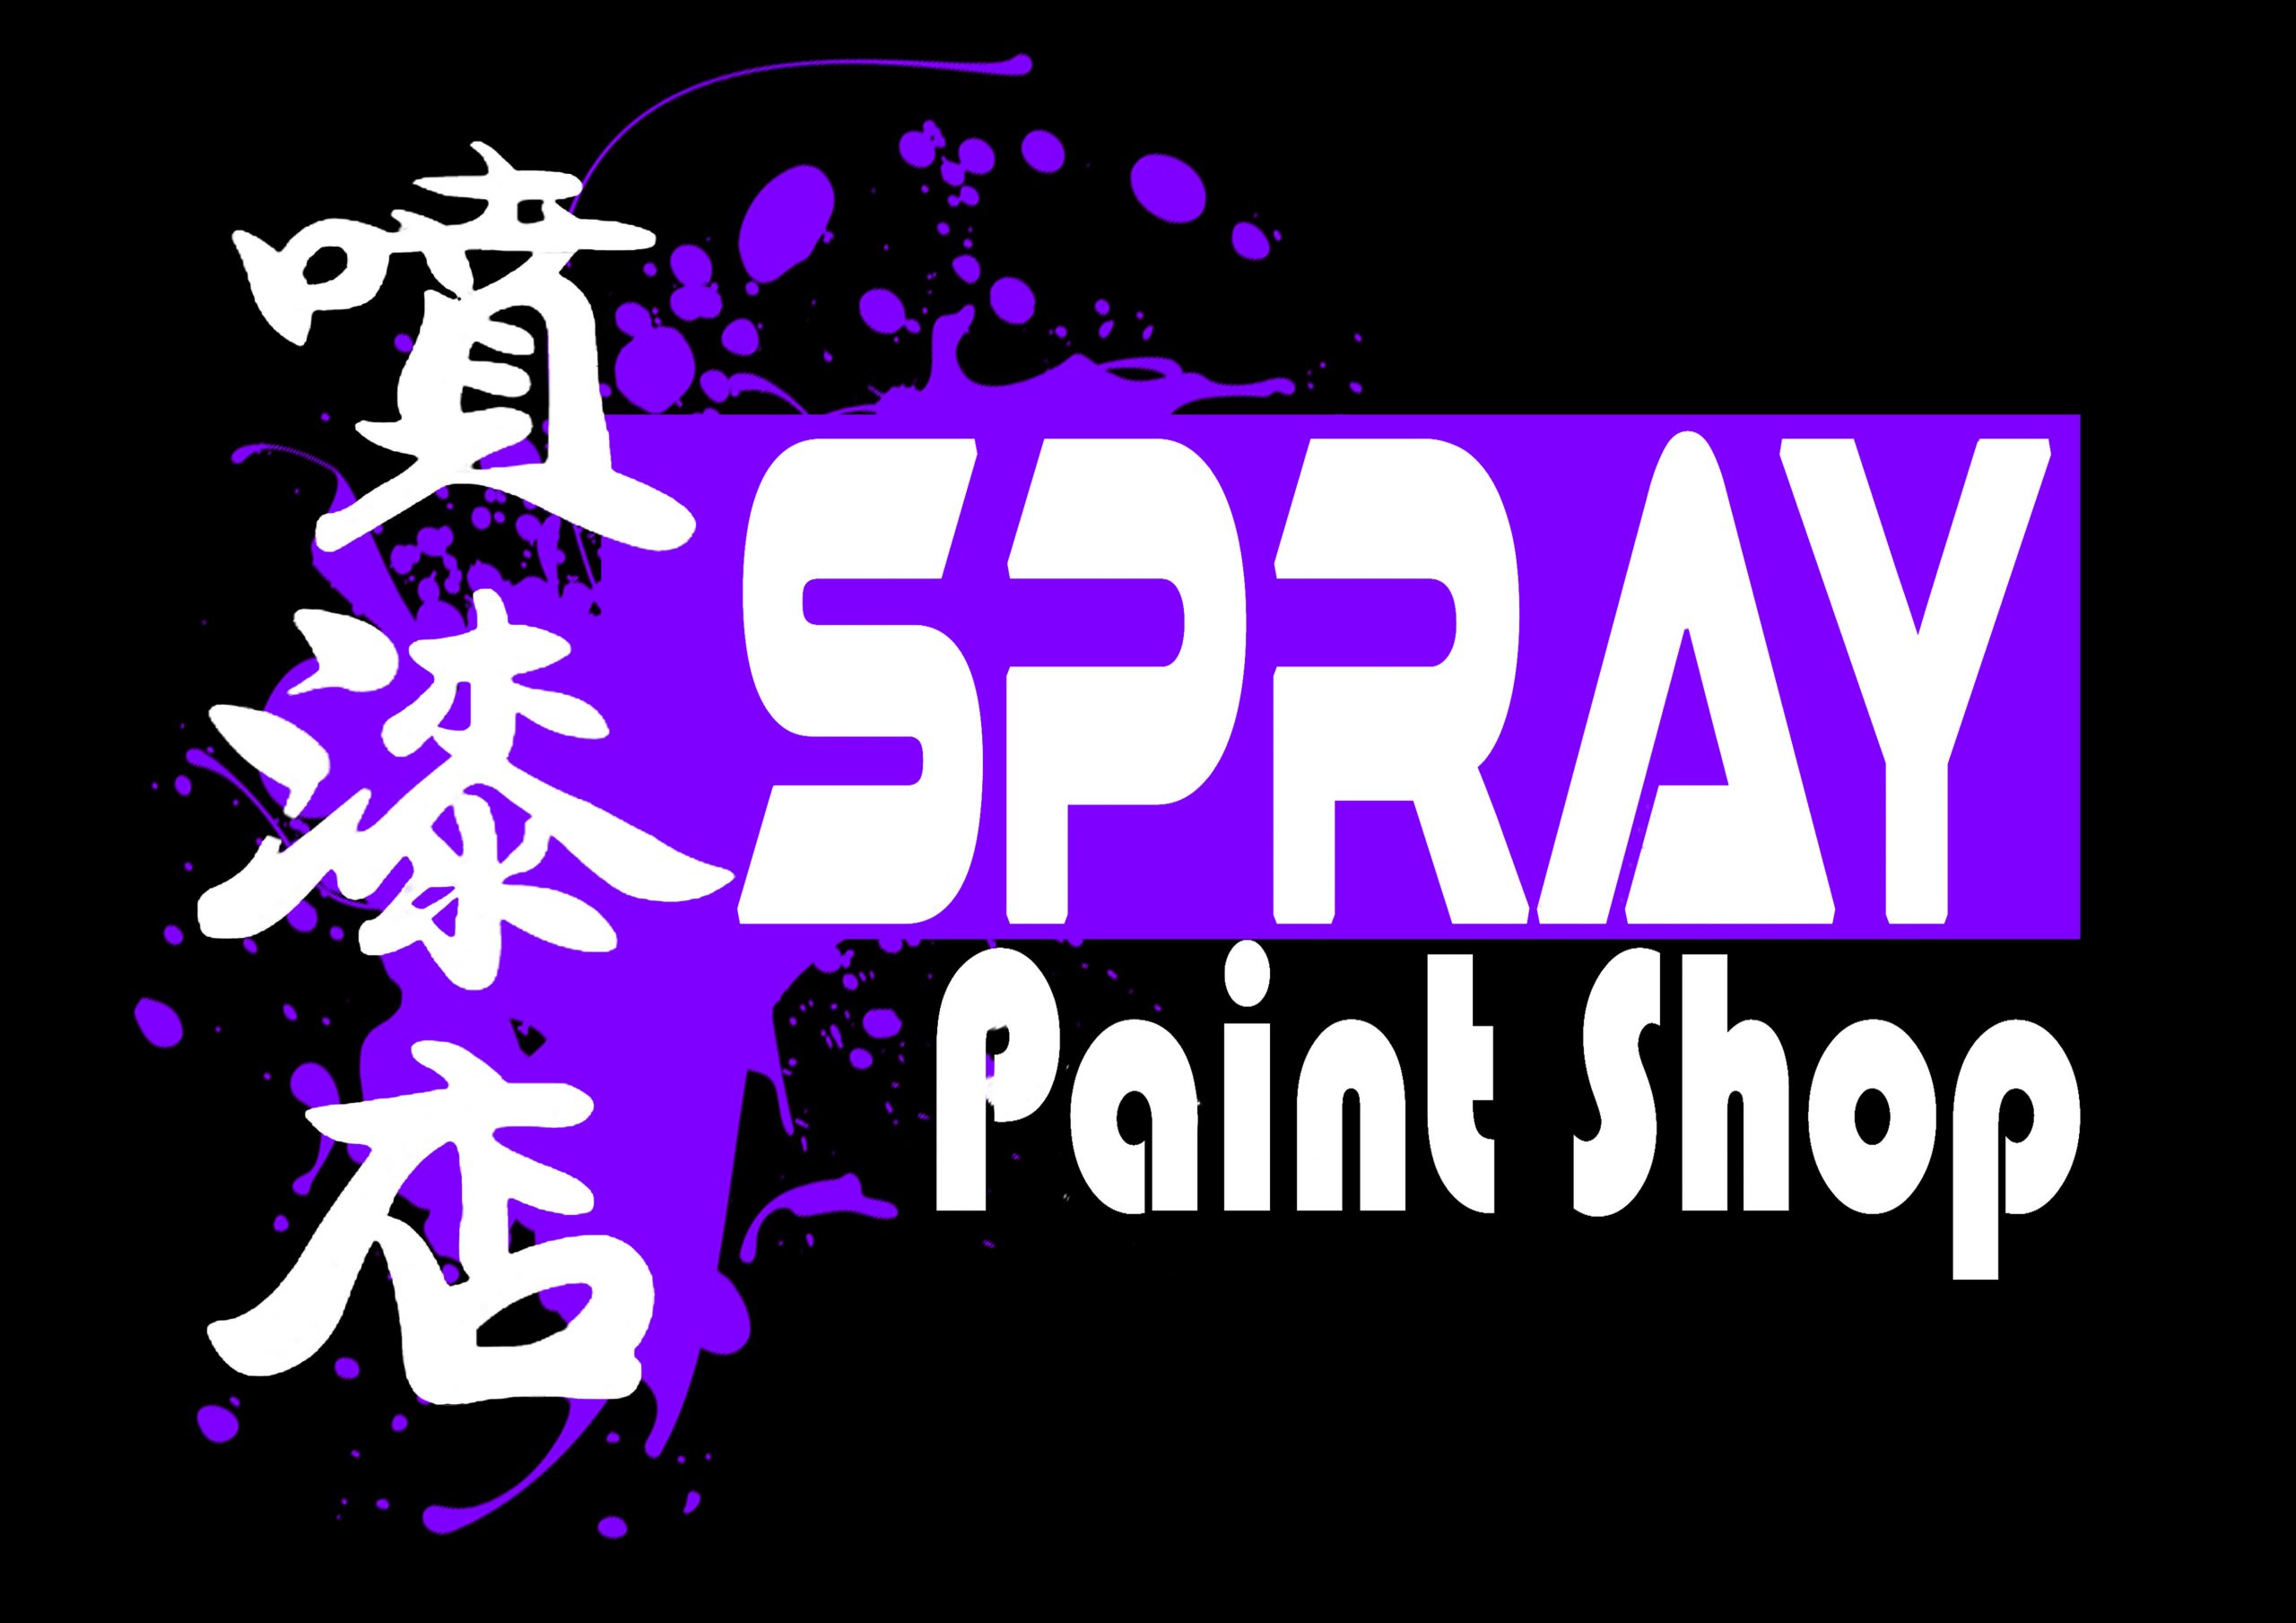 Spray Paint Shop